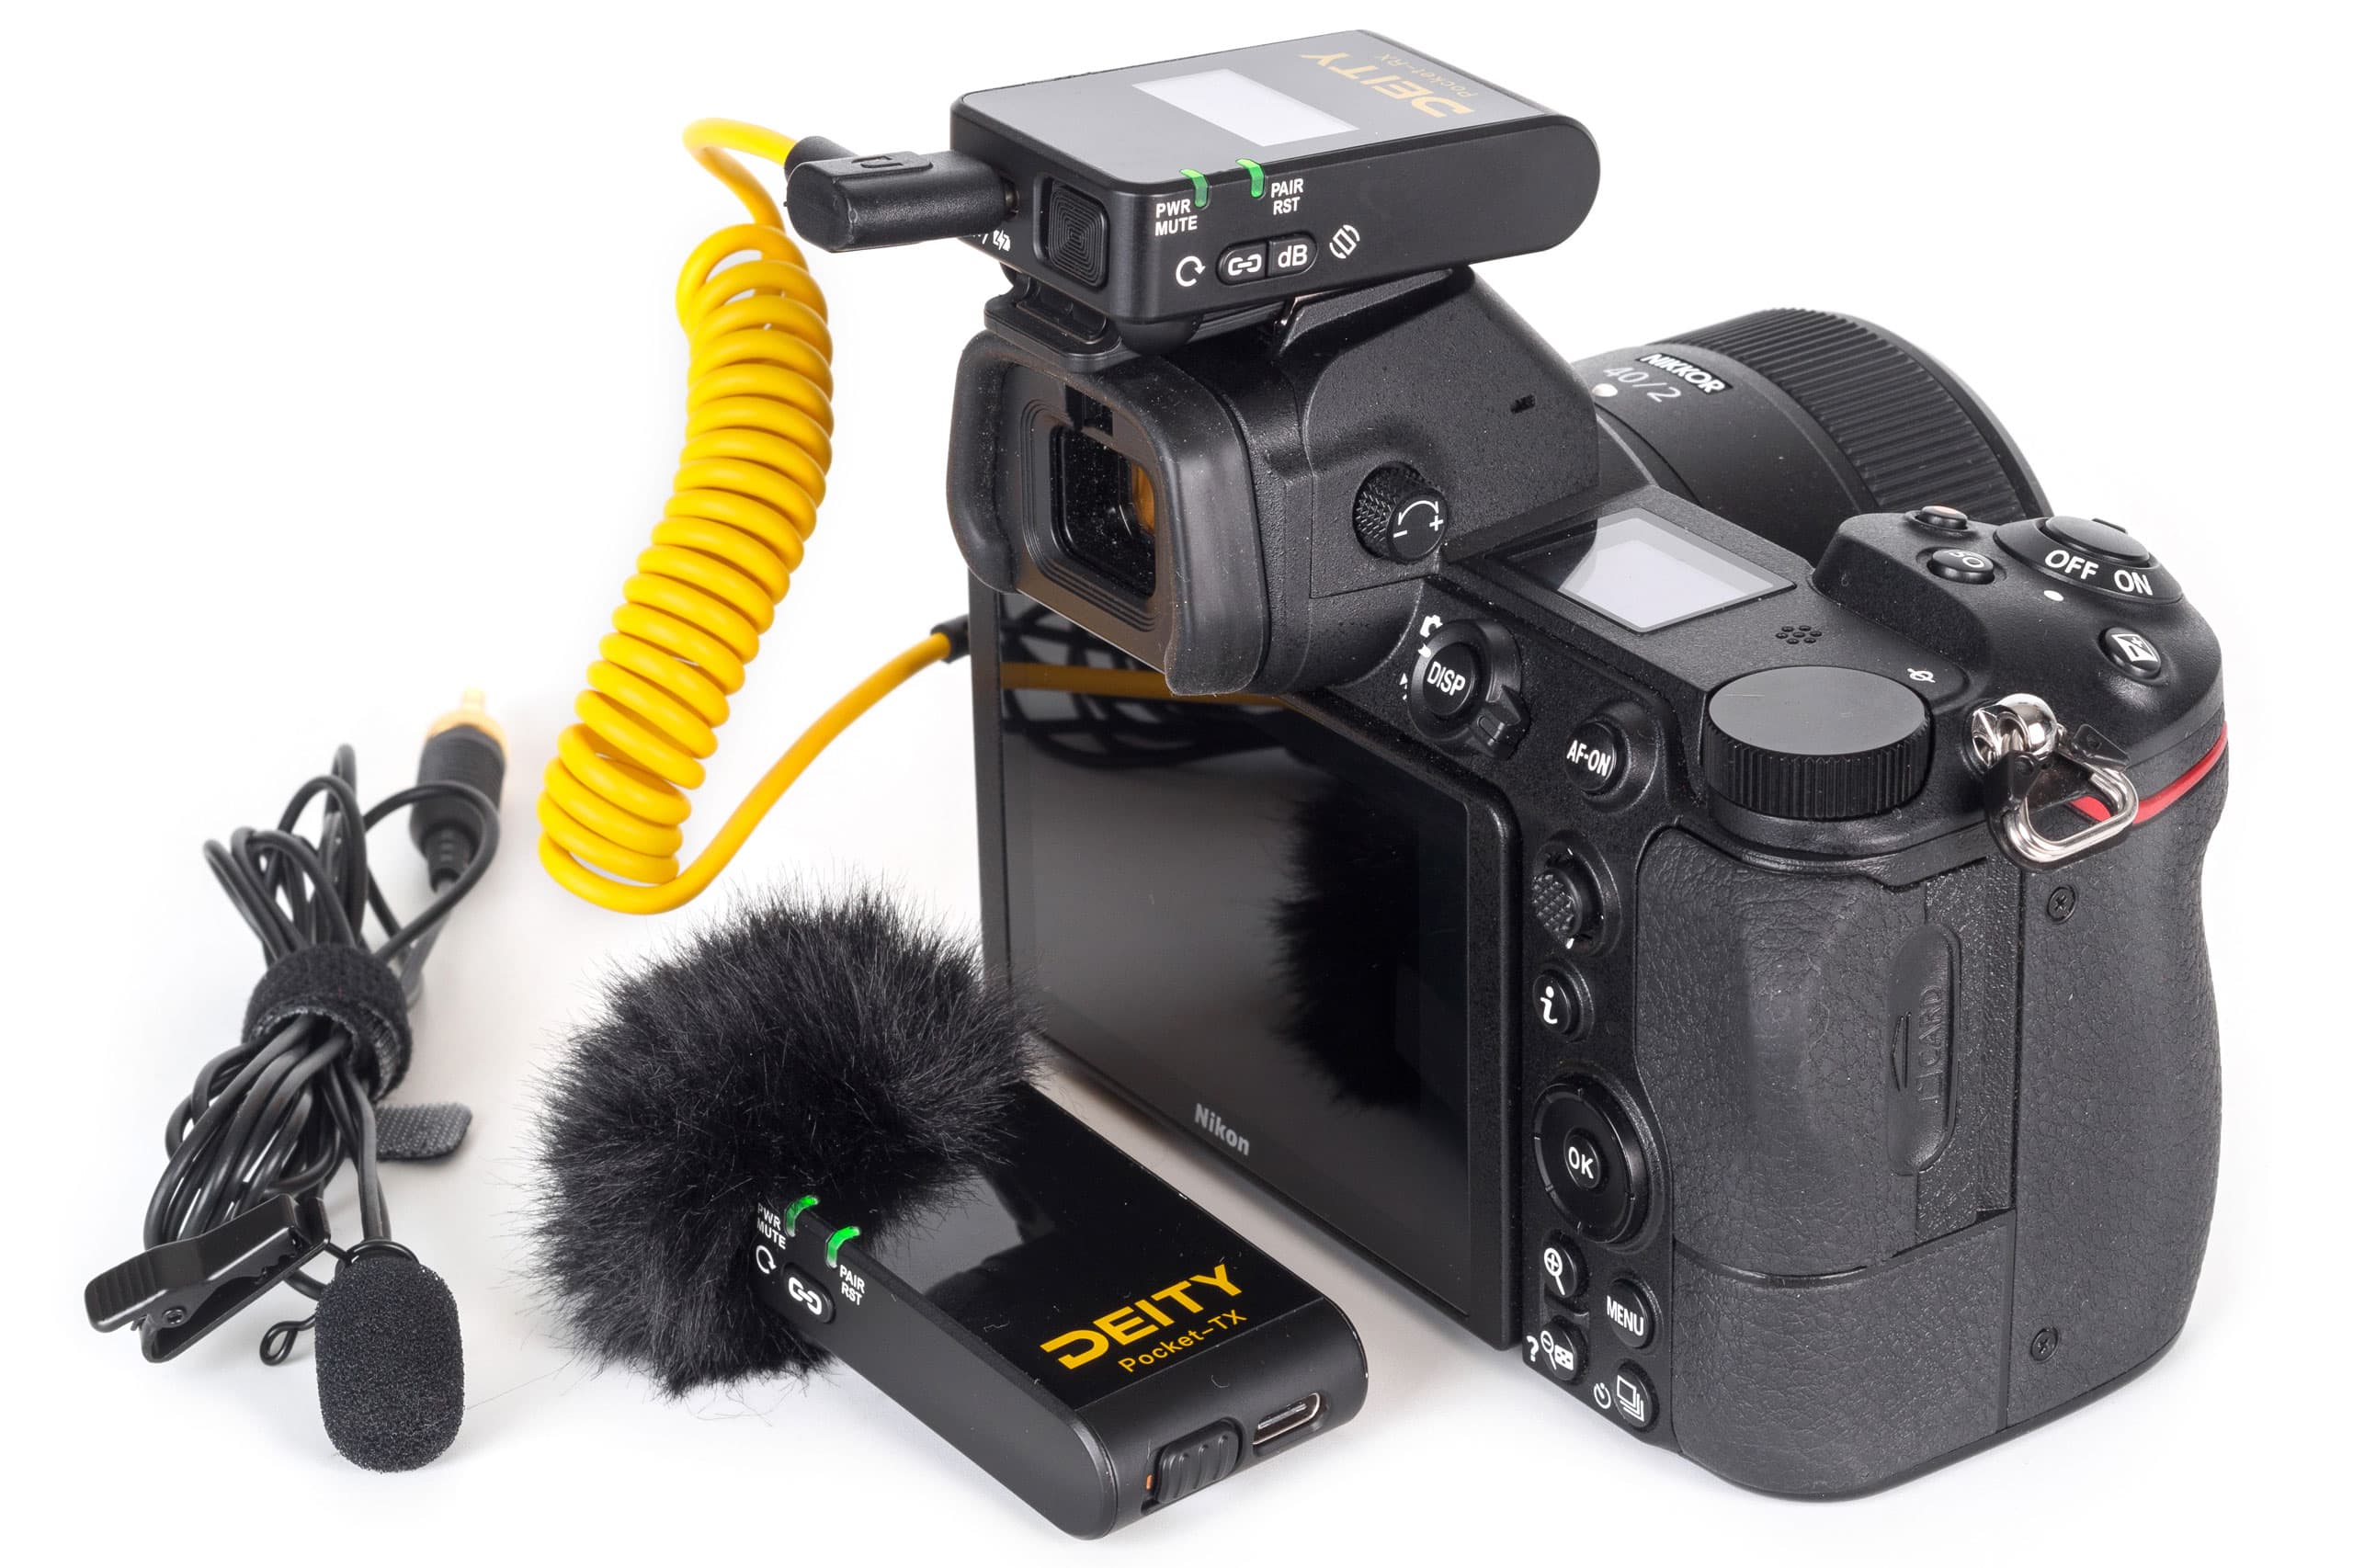 Deity Pocket Wireless kit set up with camera